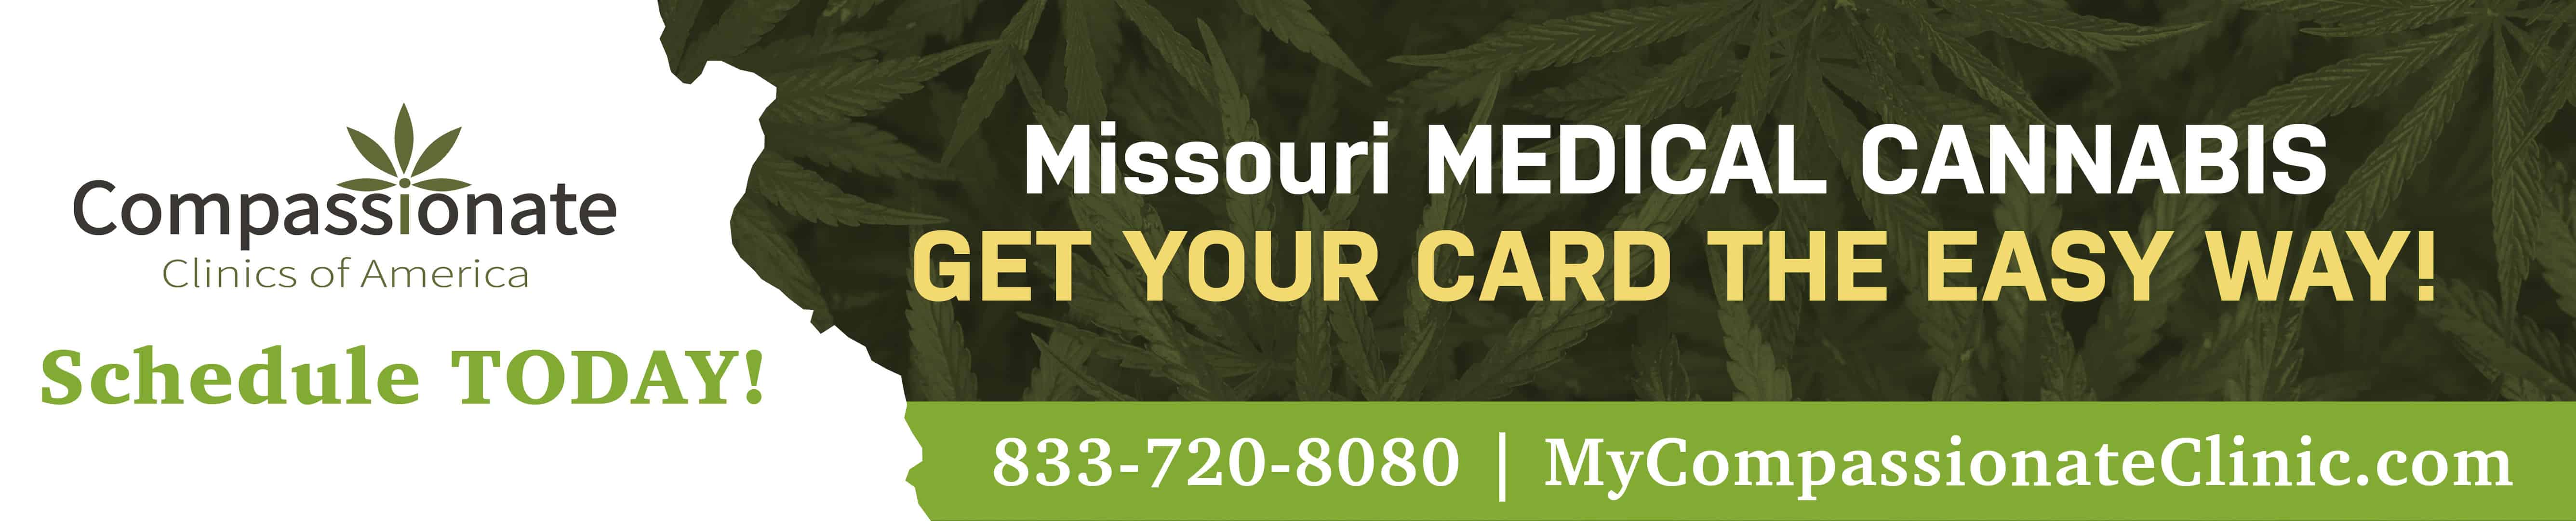 CCOA Missouri Get Your Card 2796x565 02